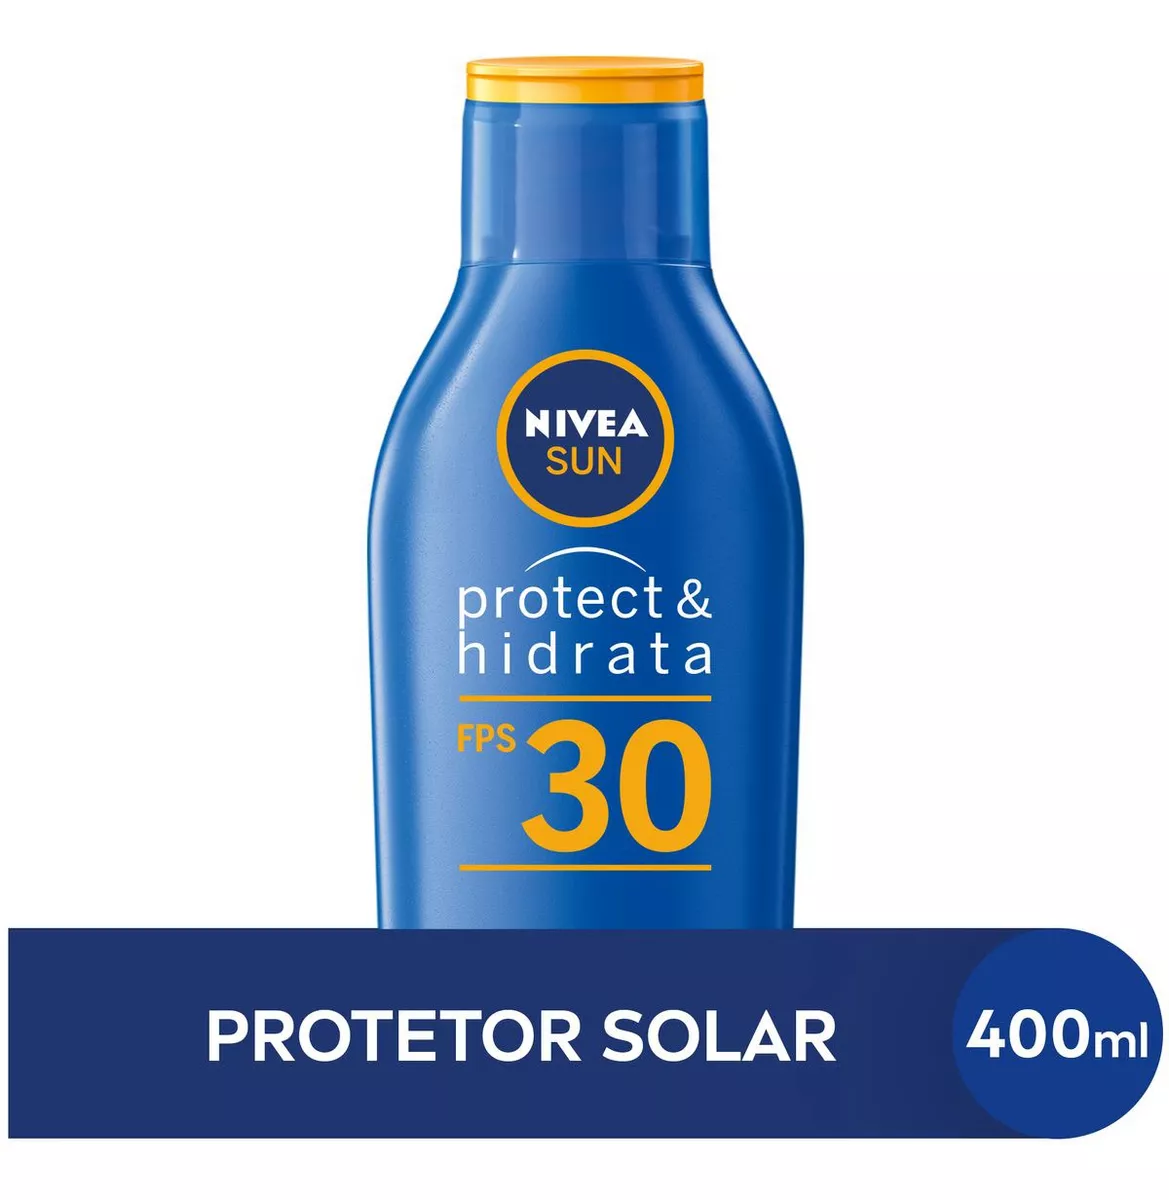 Nivea Sun Protetor Solar Protect & Hidrata Fps30 400ml